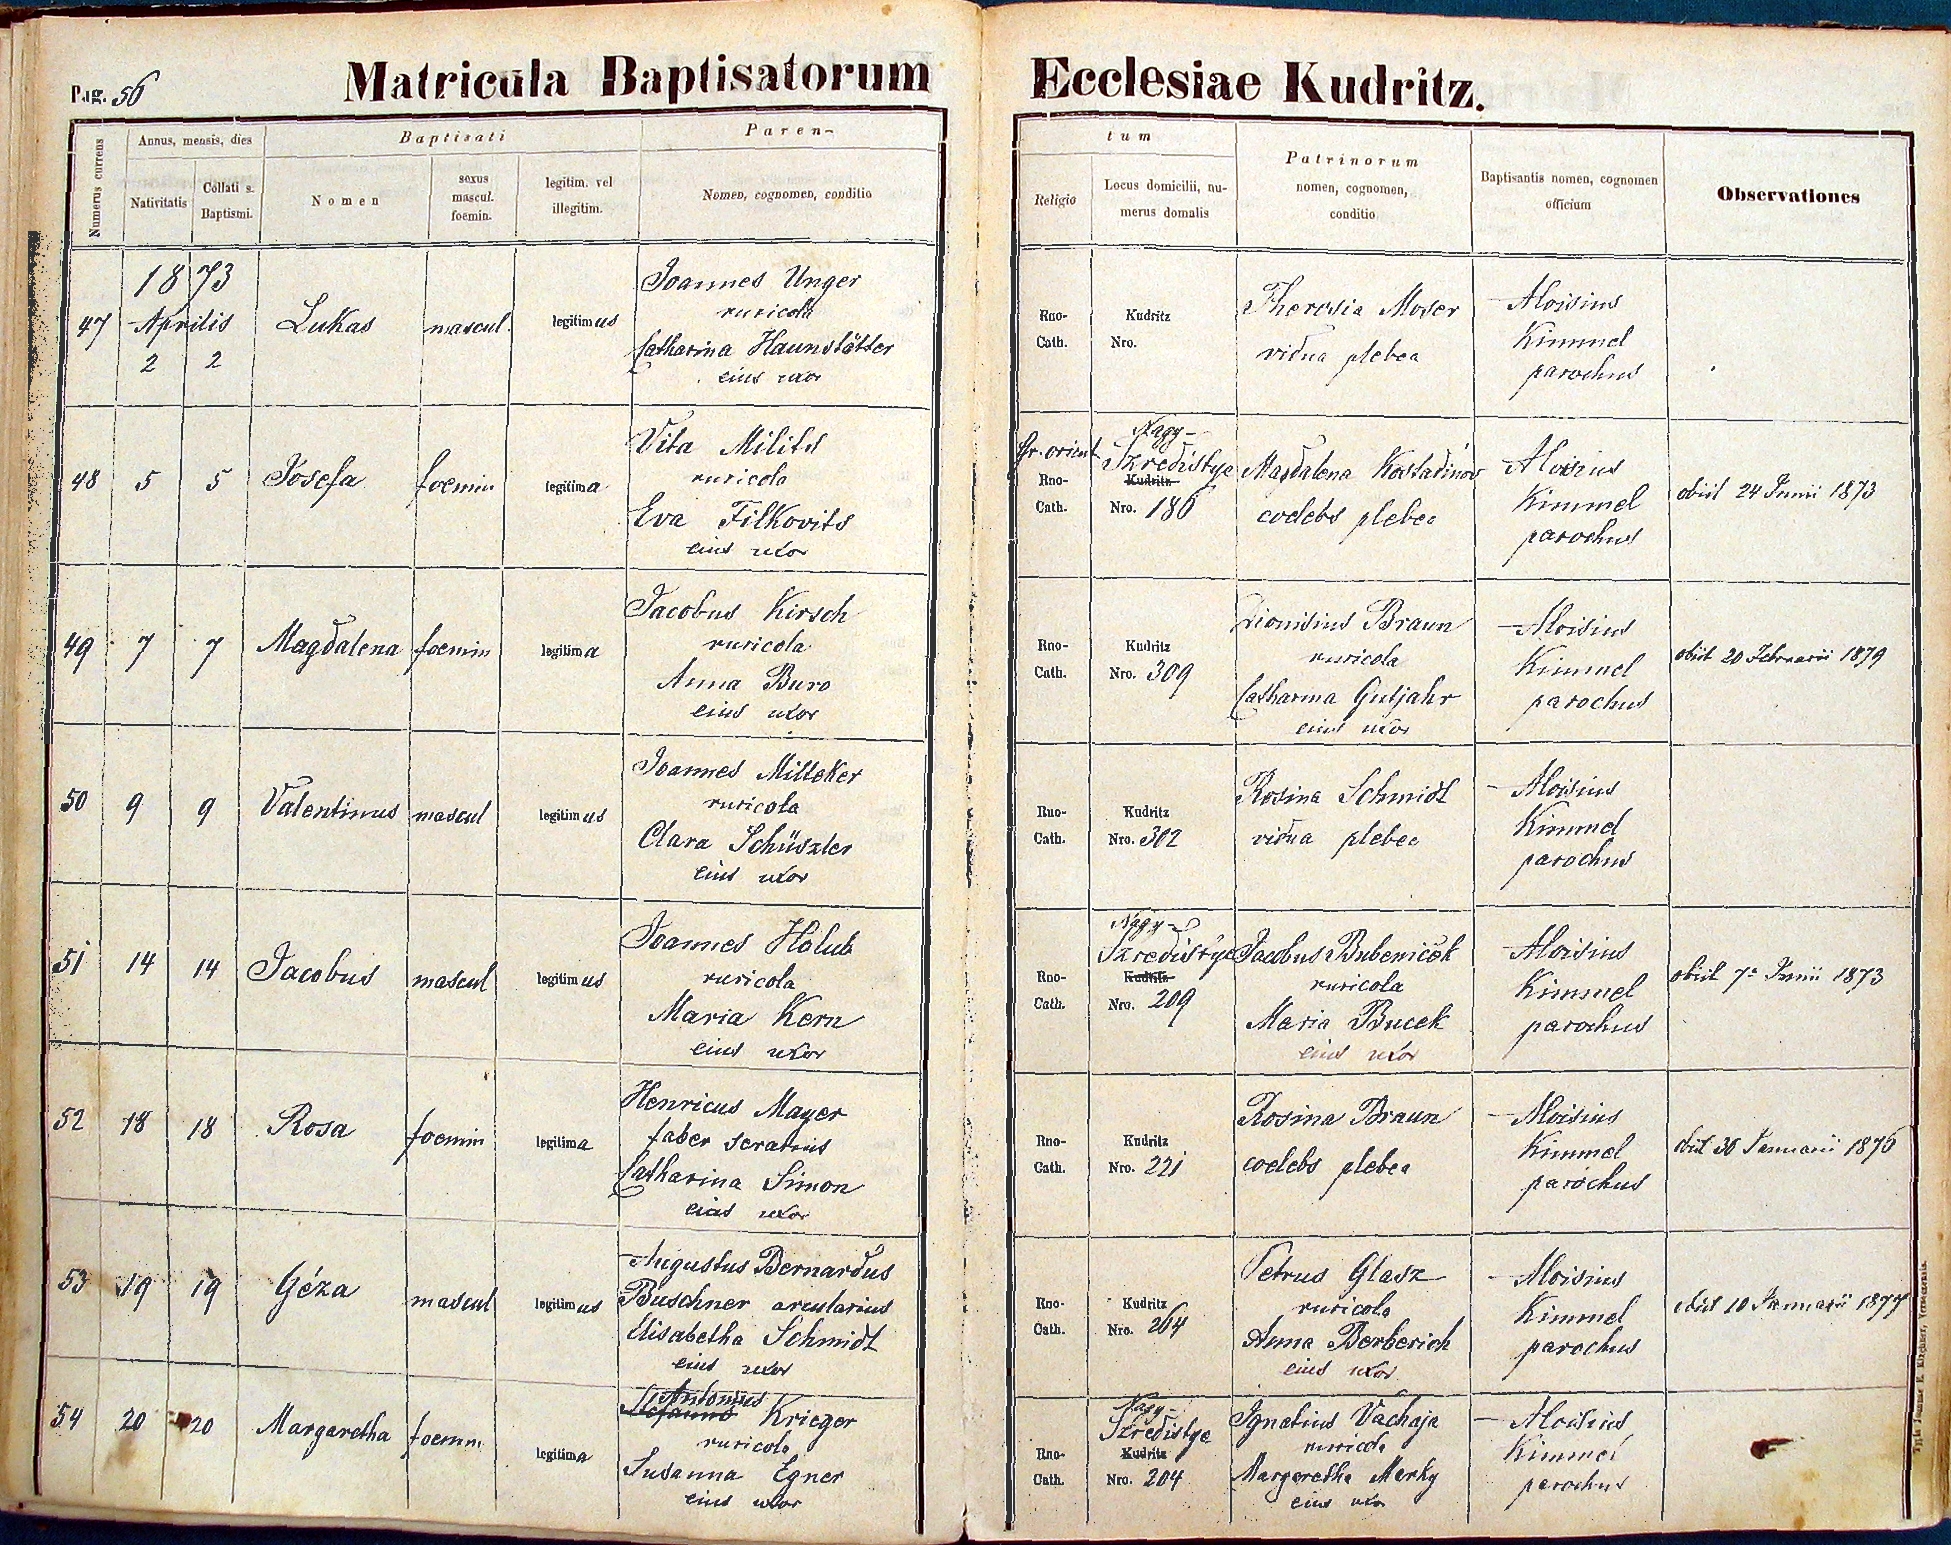 images/church_records/BIRTHS/1884-1899B/1887/056